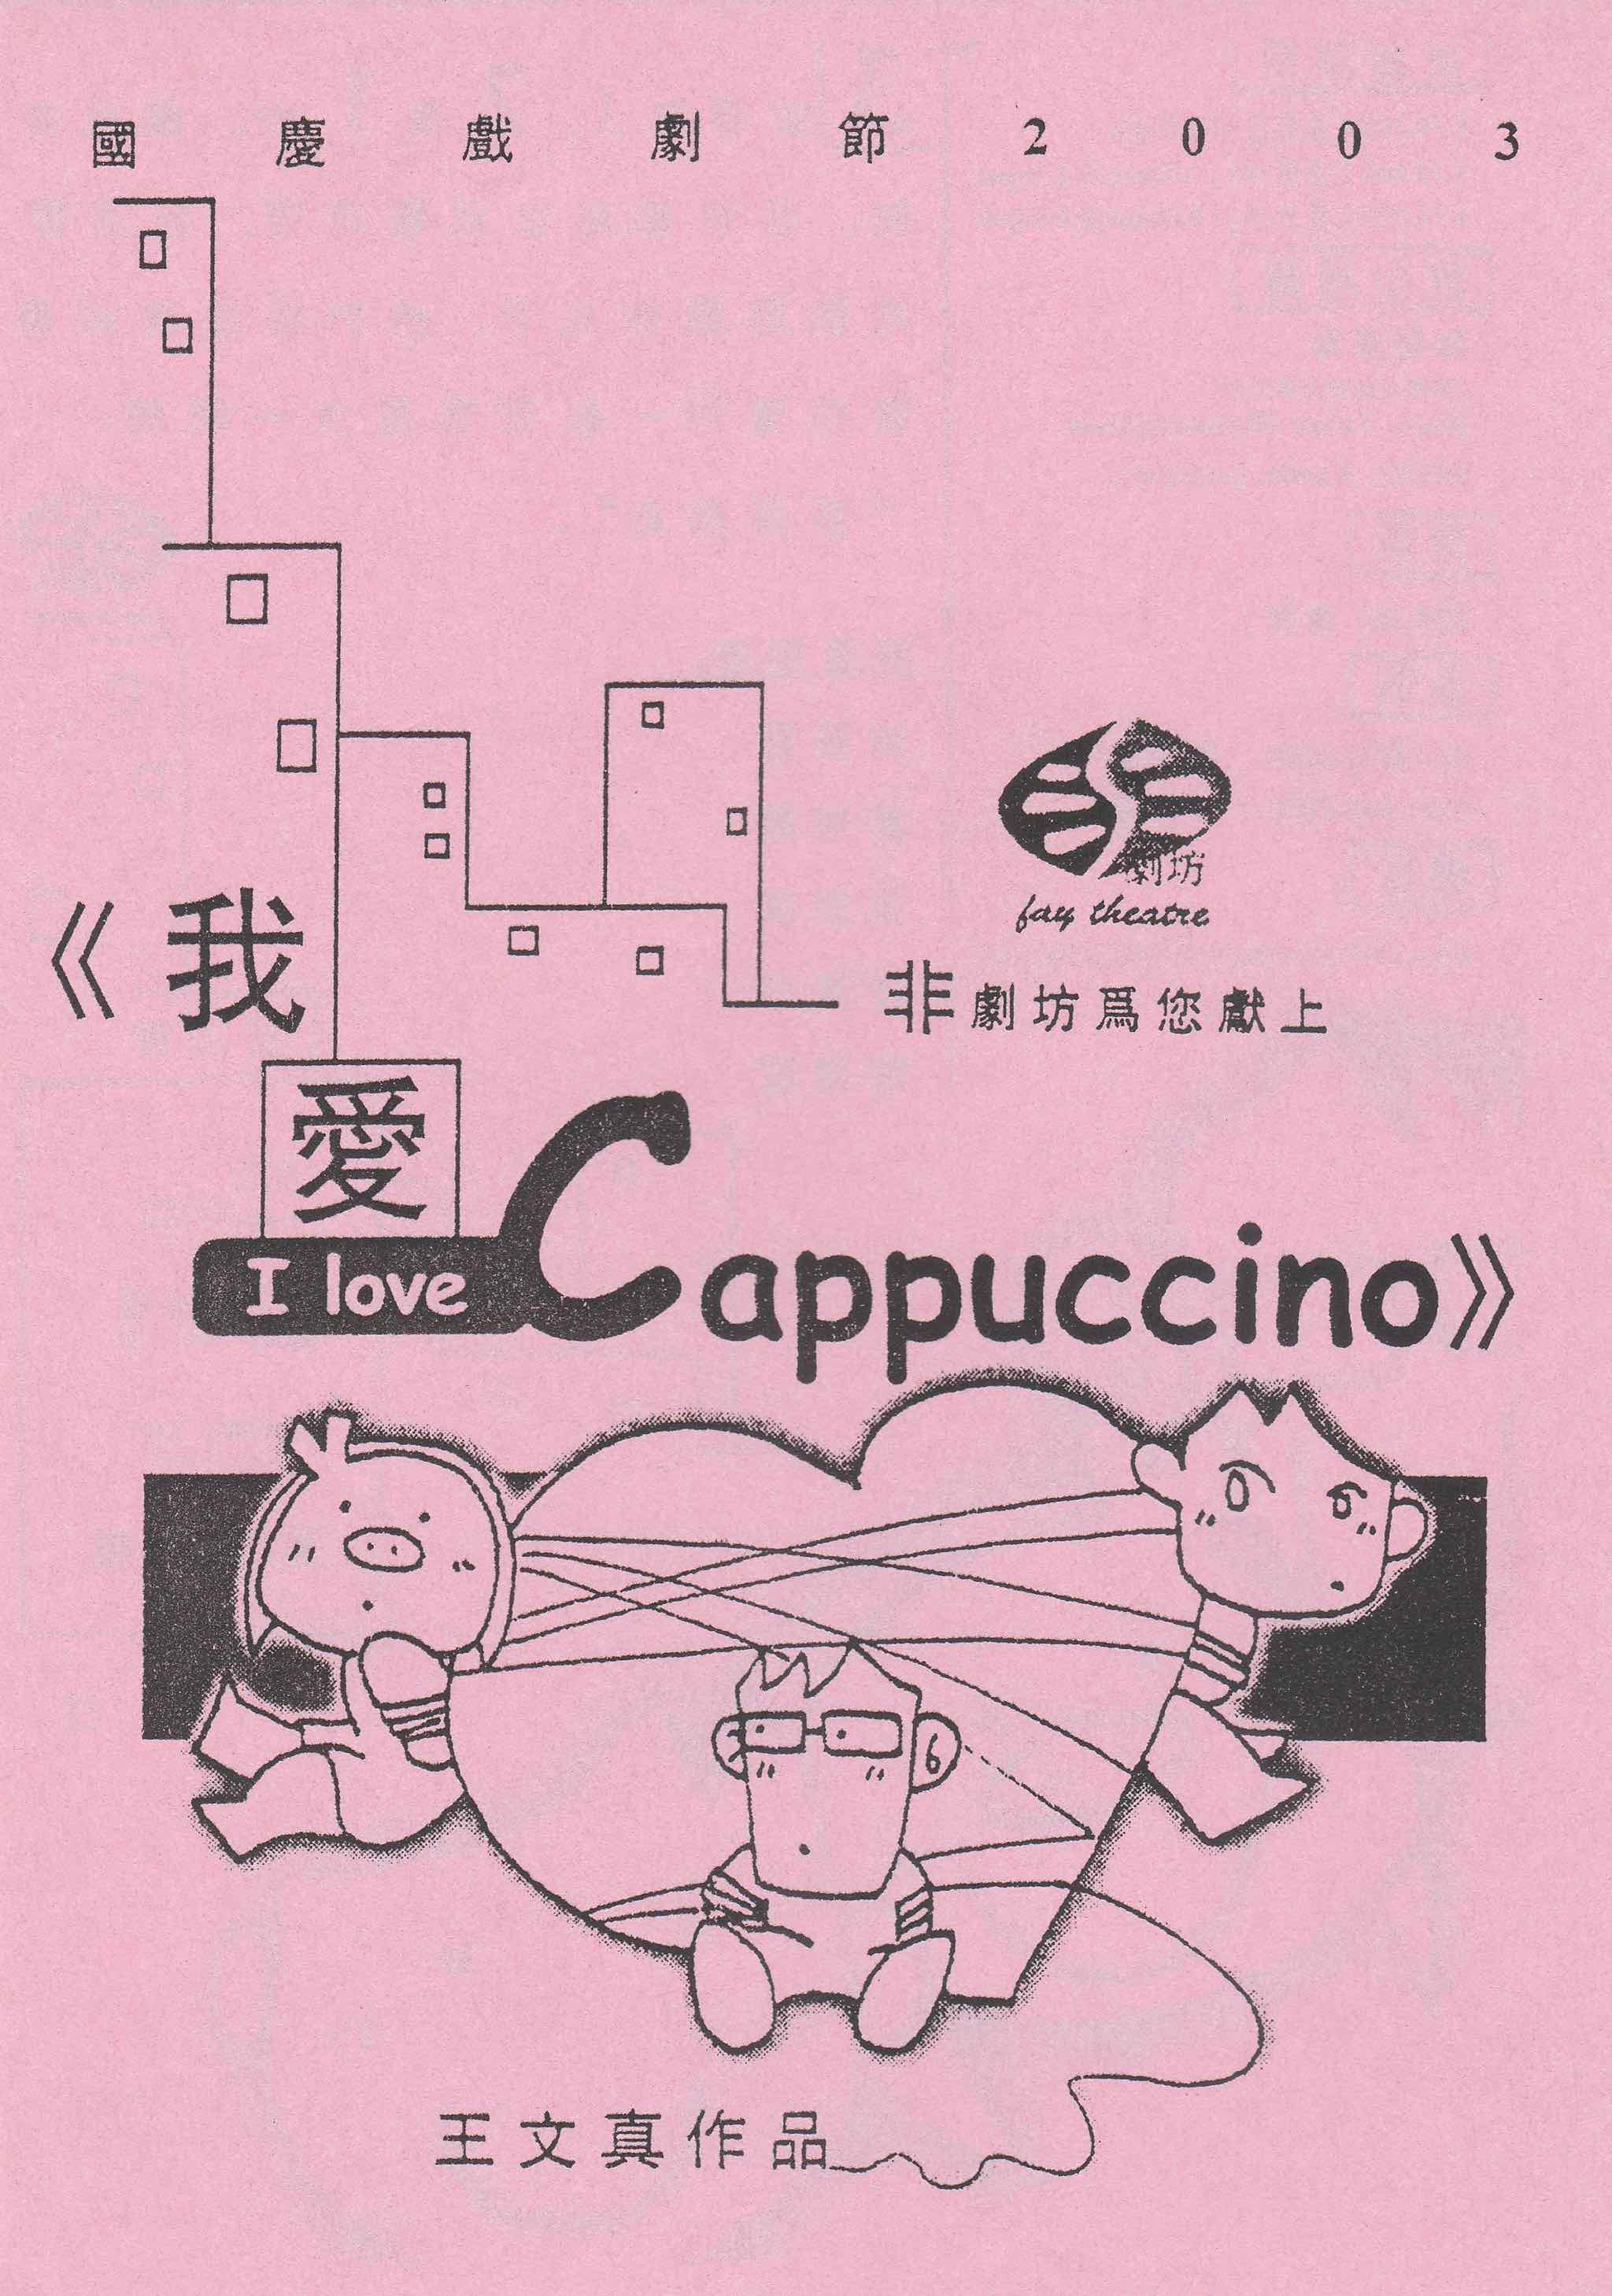 2003 I Love Cappuccino Flyer 01